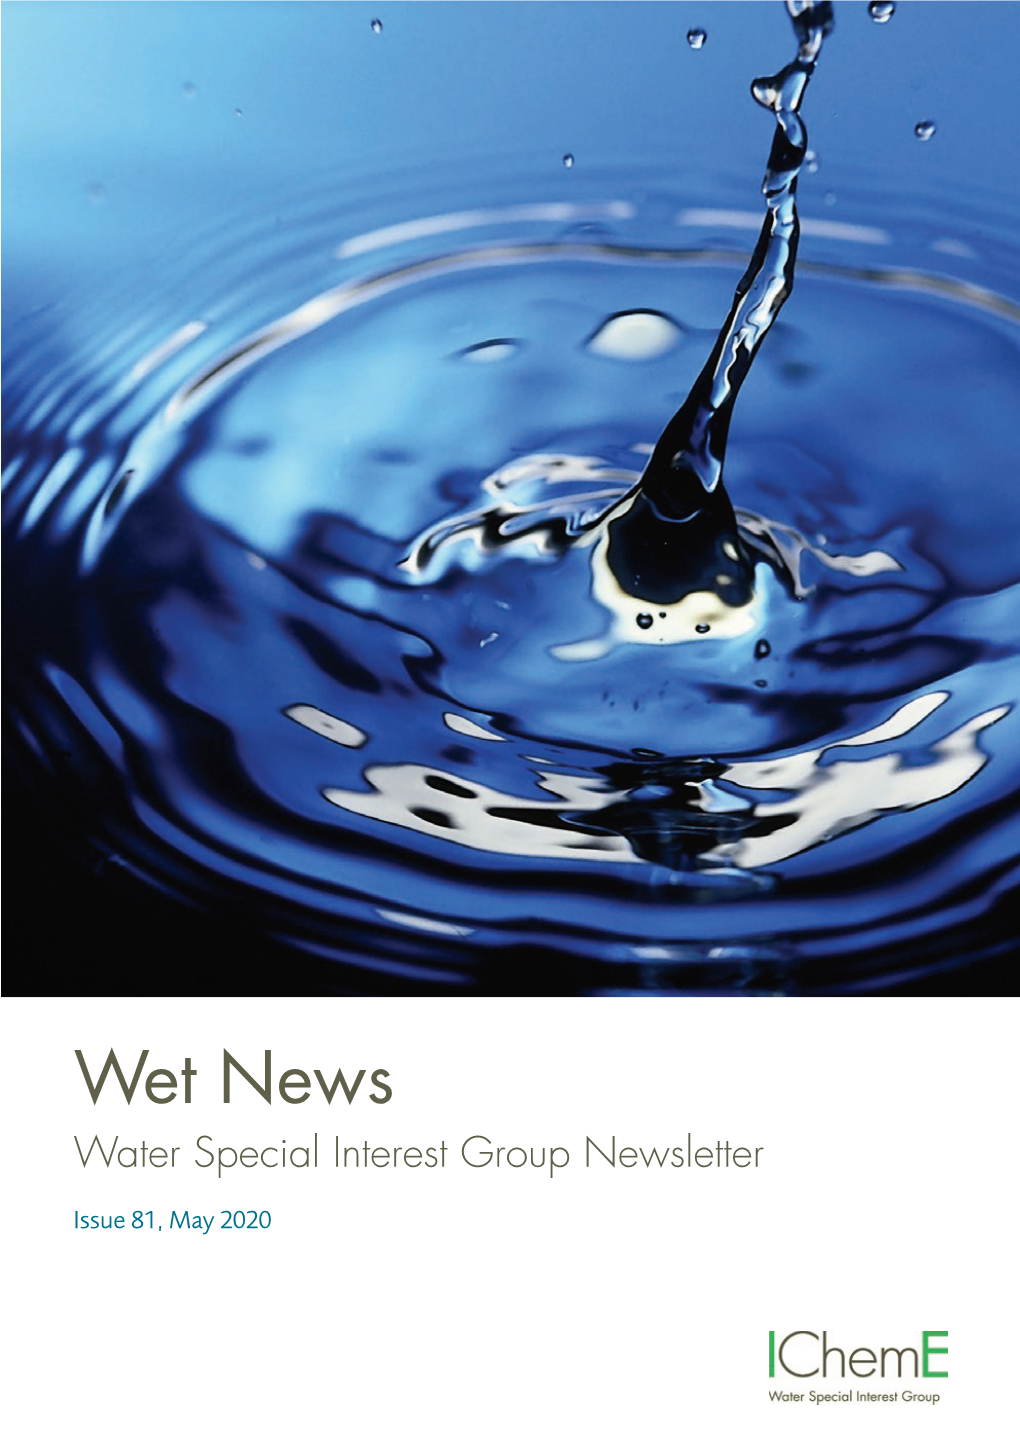 Wet News Water Special Interest Group Newsletter